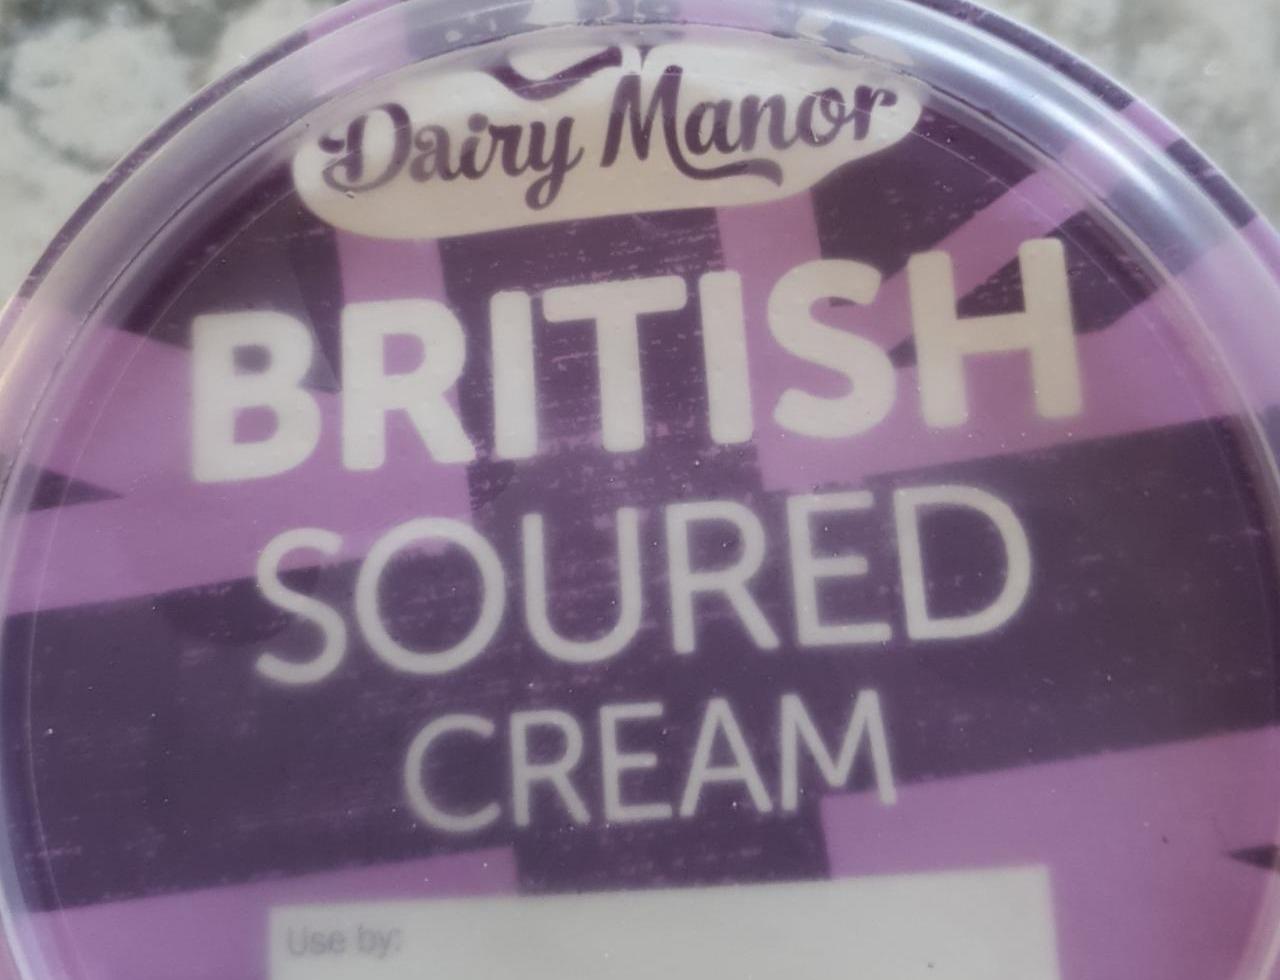 Zdjęcia - Soured cream Dairy Manor